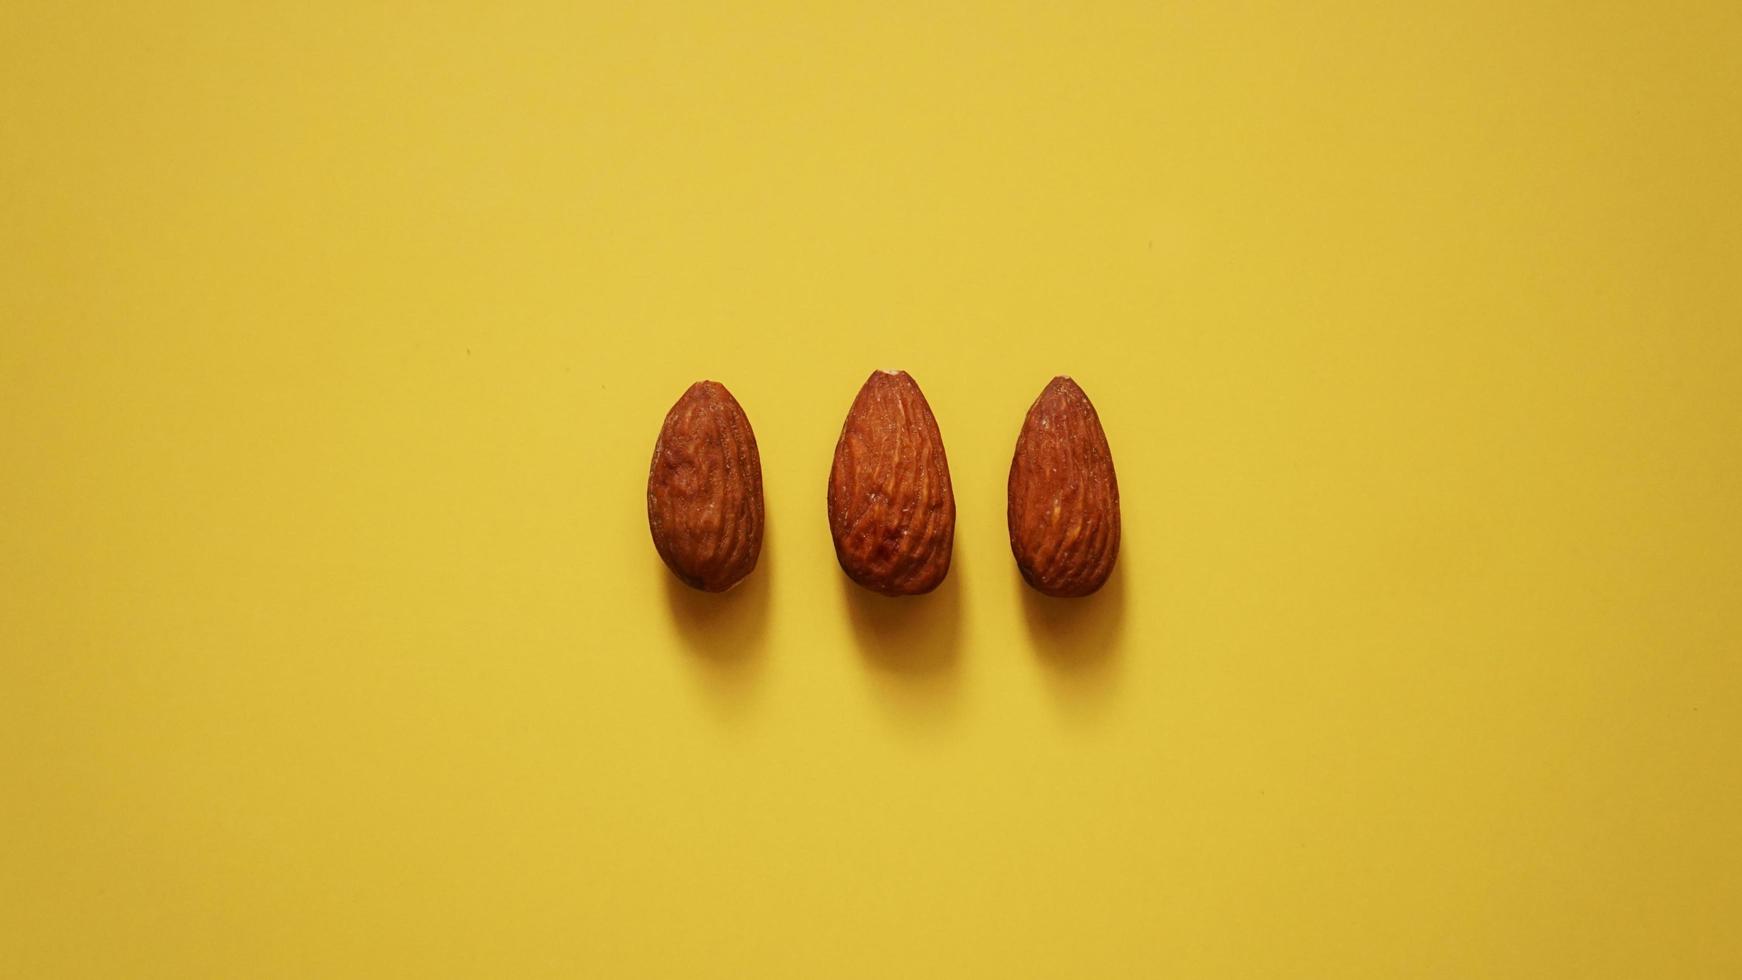 The three almonds on yellow background photo